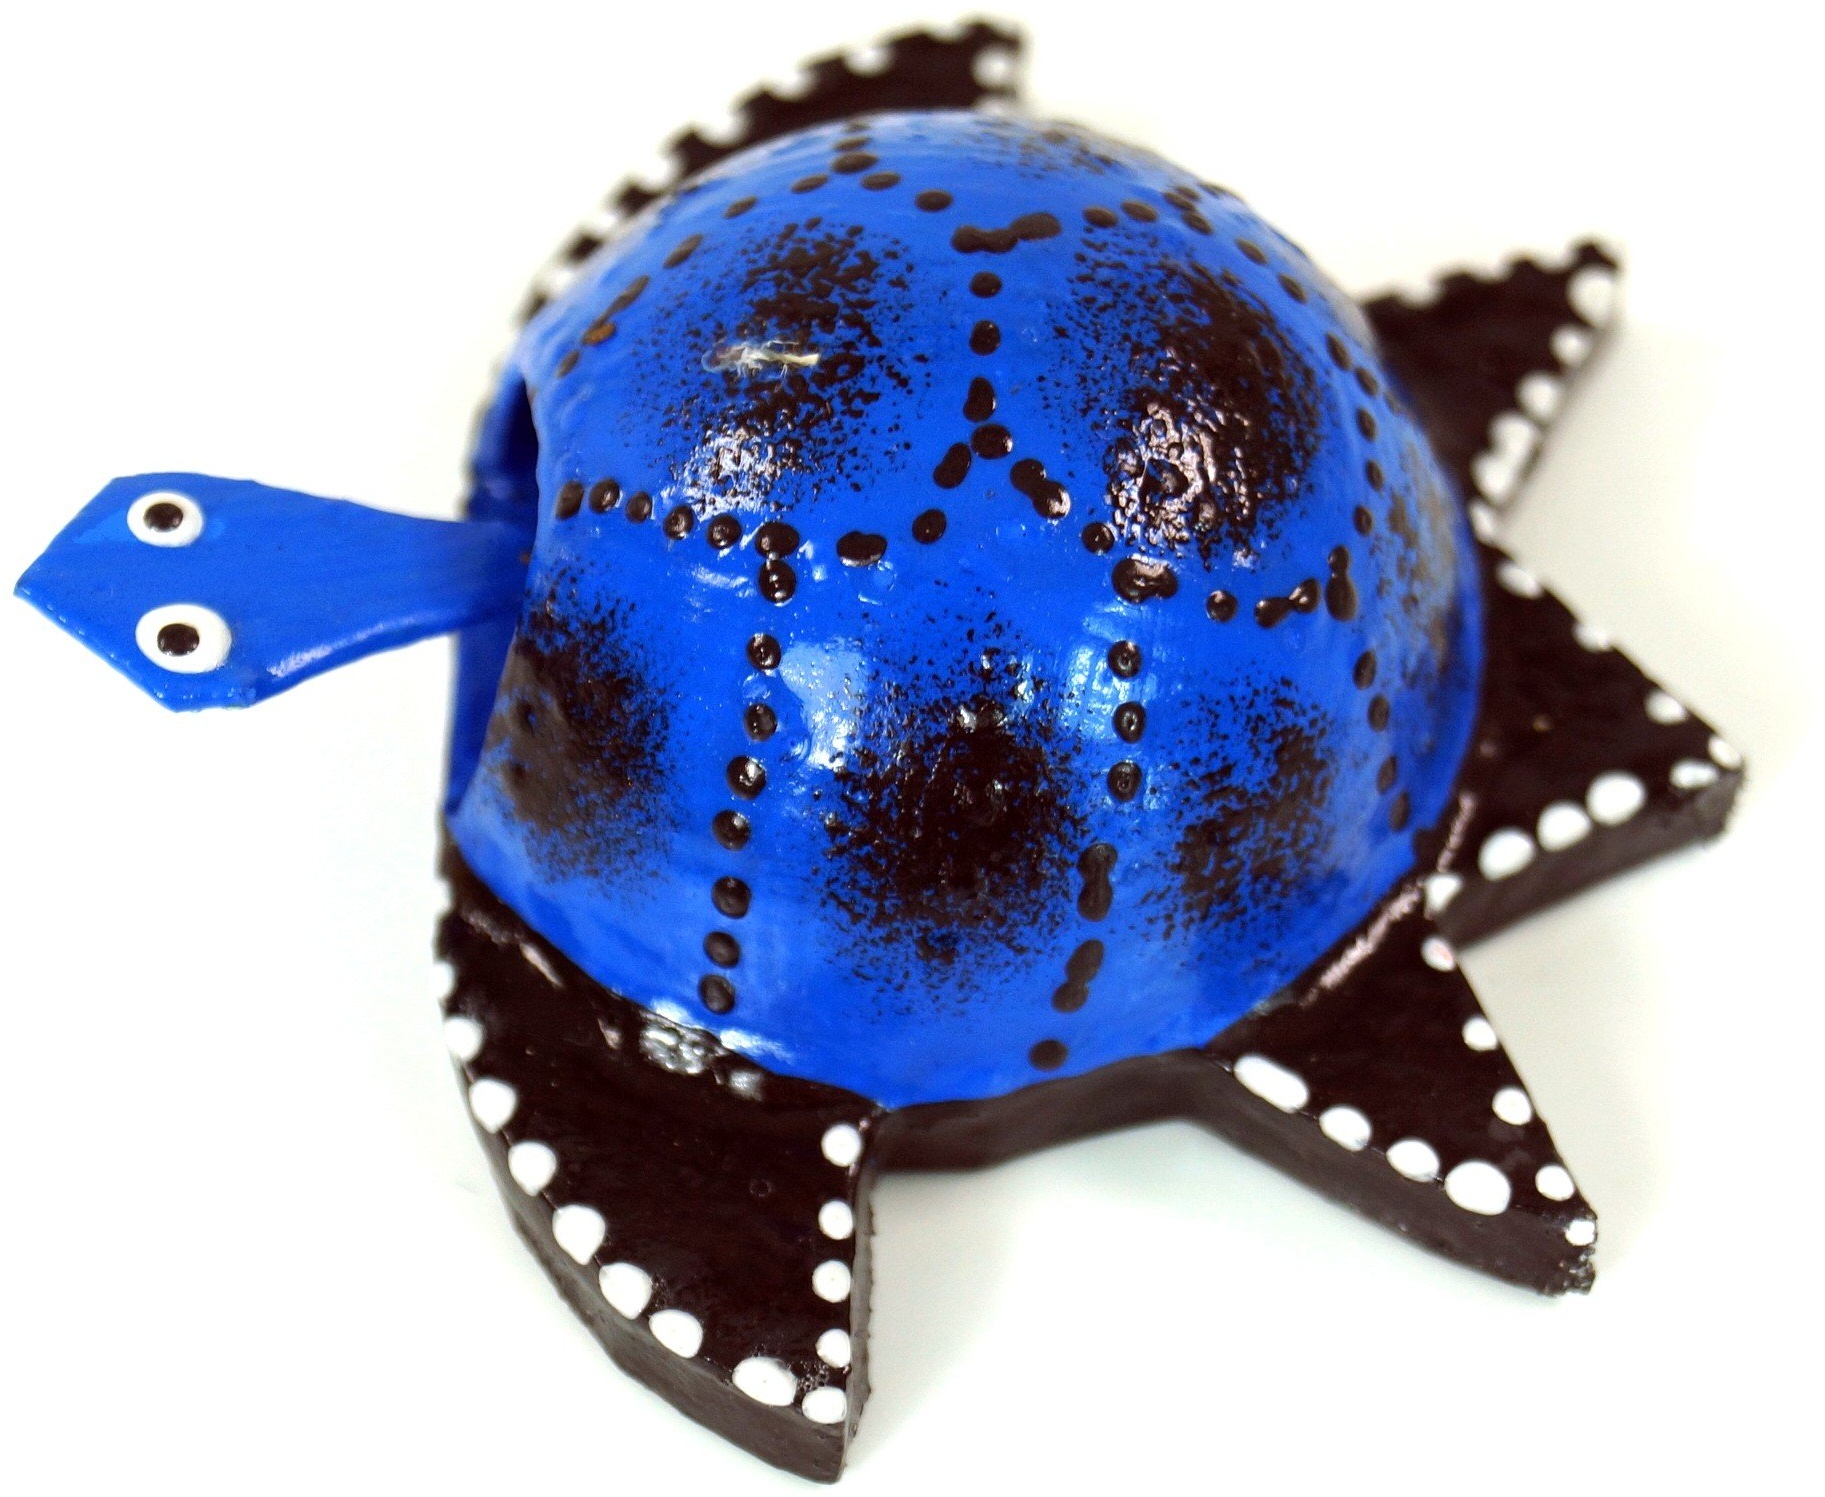 GURU SHOP Wackeltier Schildkröte, Wackelkopf Tier, Blau, Holz, Farbe: Blau, 2x6x6 cm, Tierfiguren